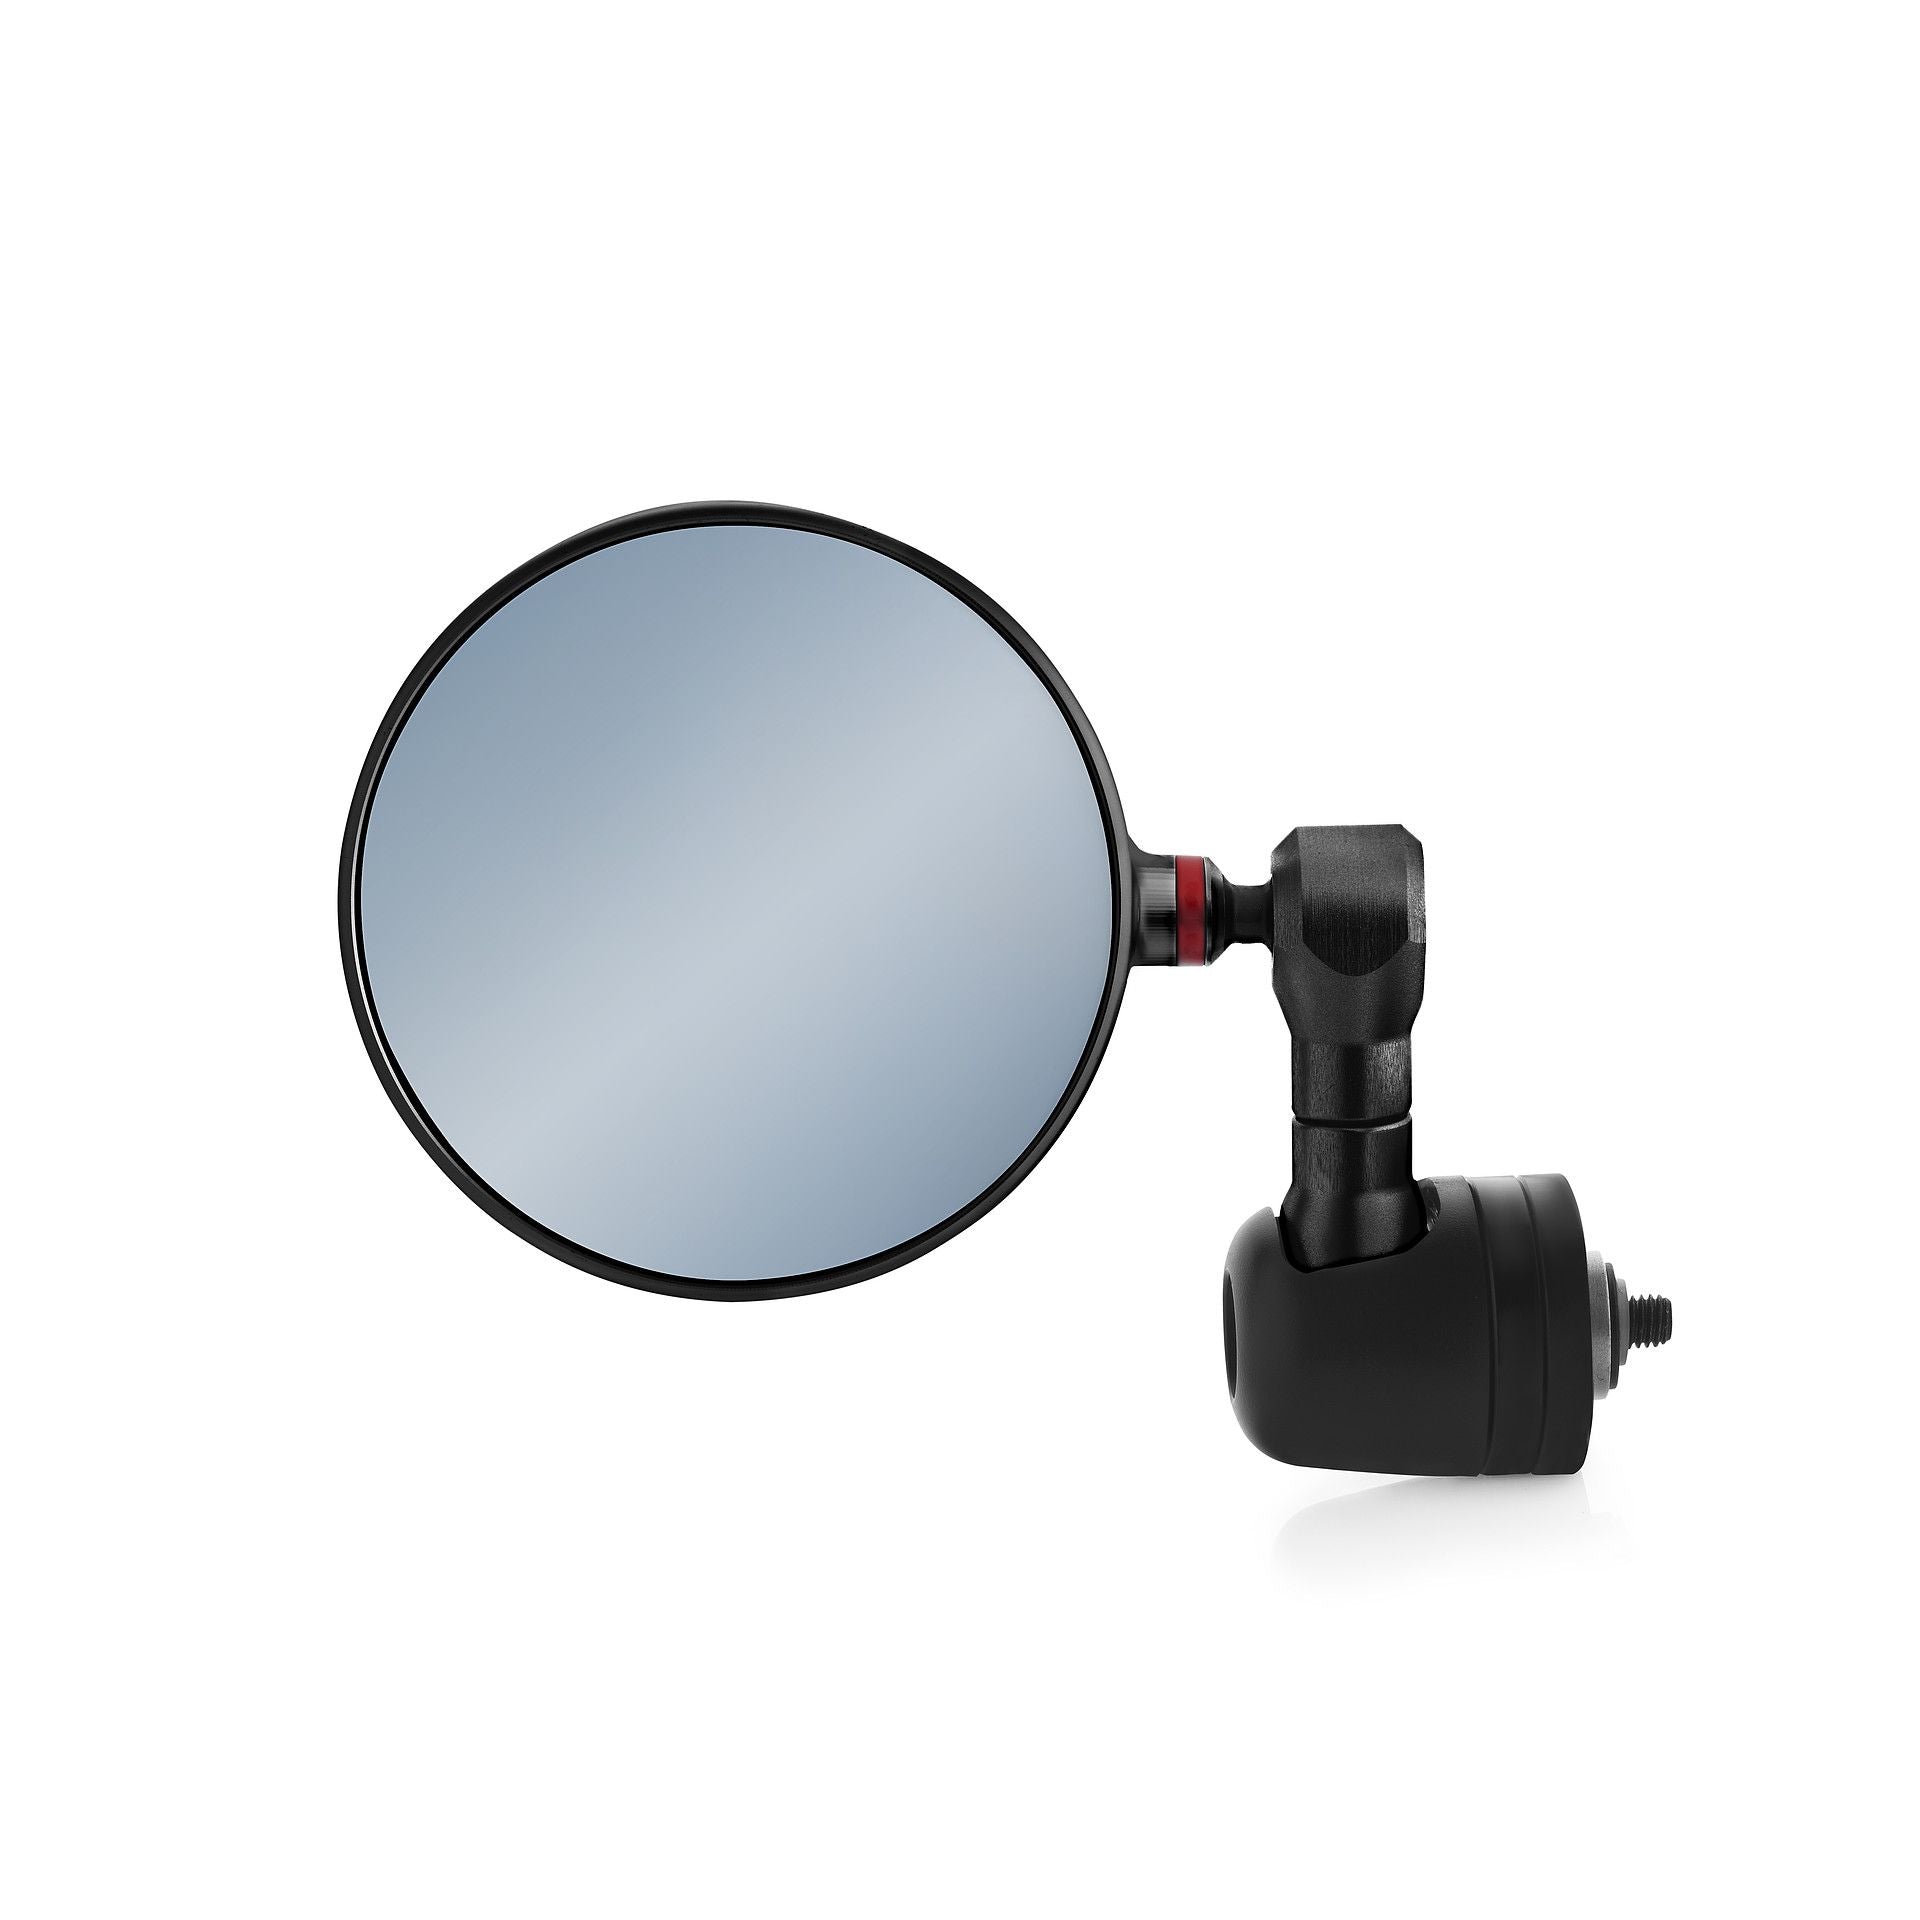 Rizoma Spy R 80mm Left/Right Mirror - Black